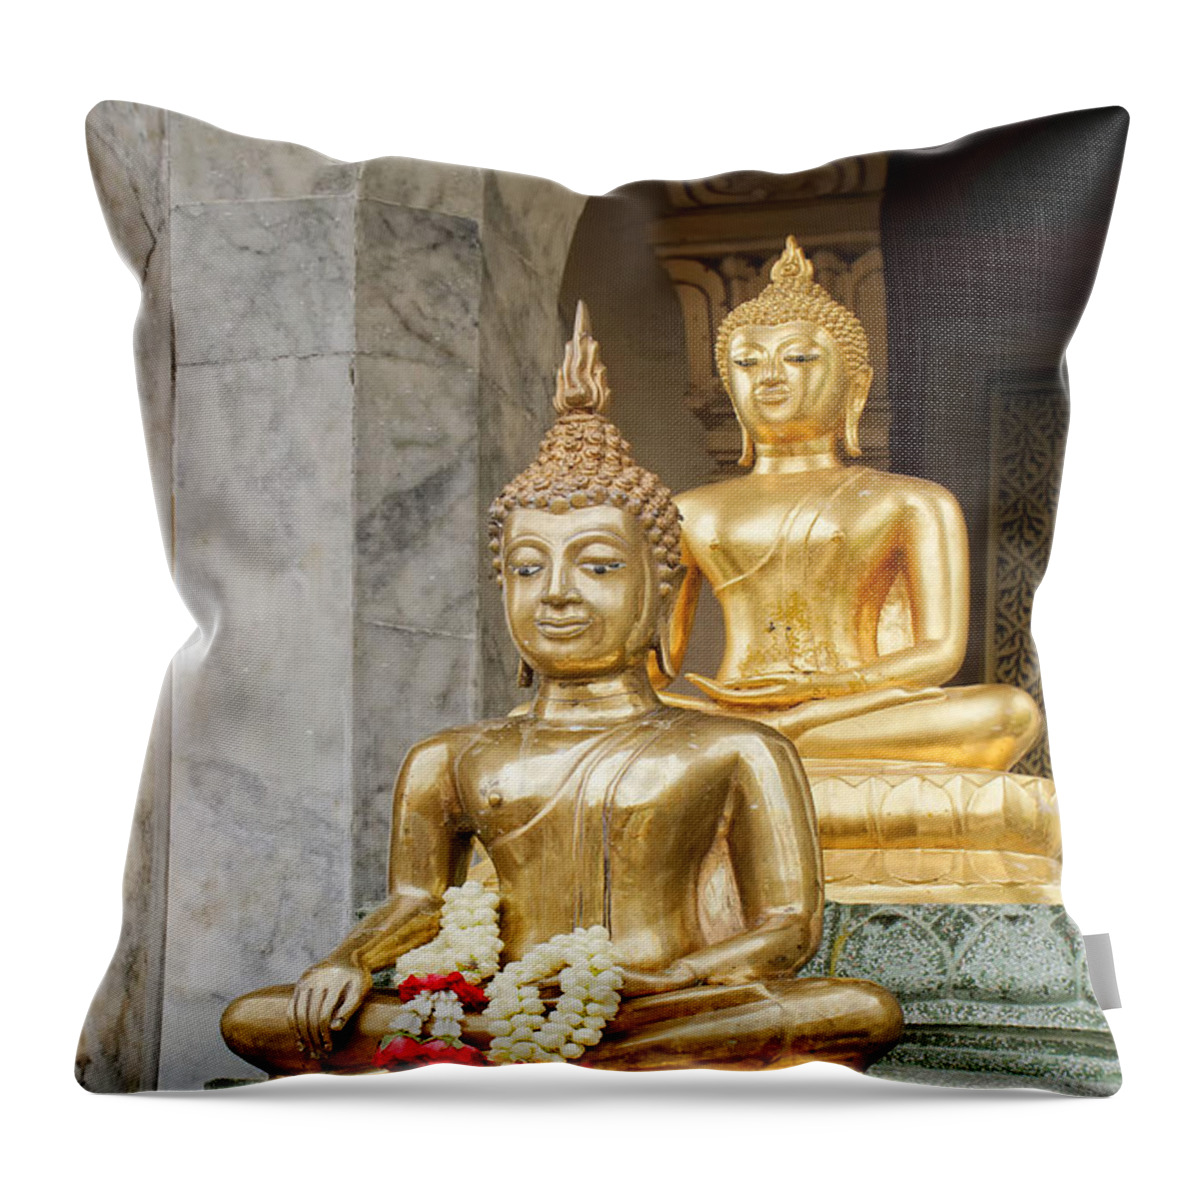 Bangkok Throw Pillow featuring the digital art Golden Buddha by Carol Ailles